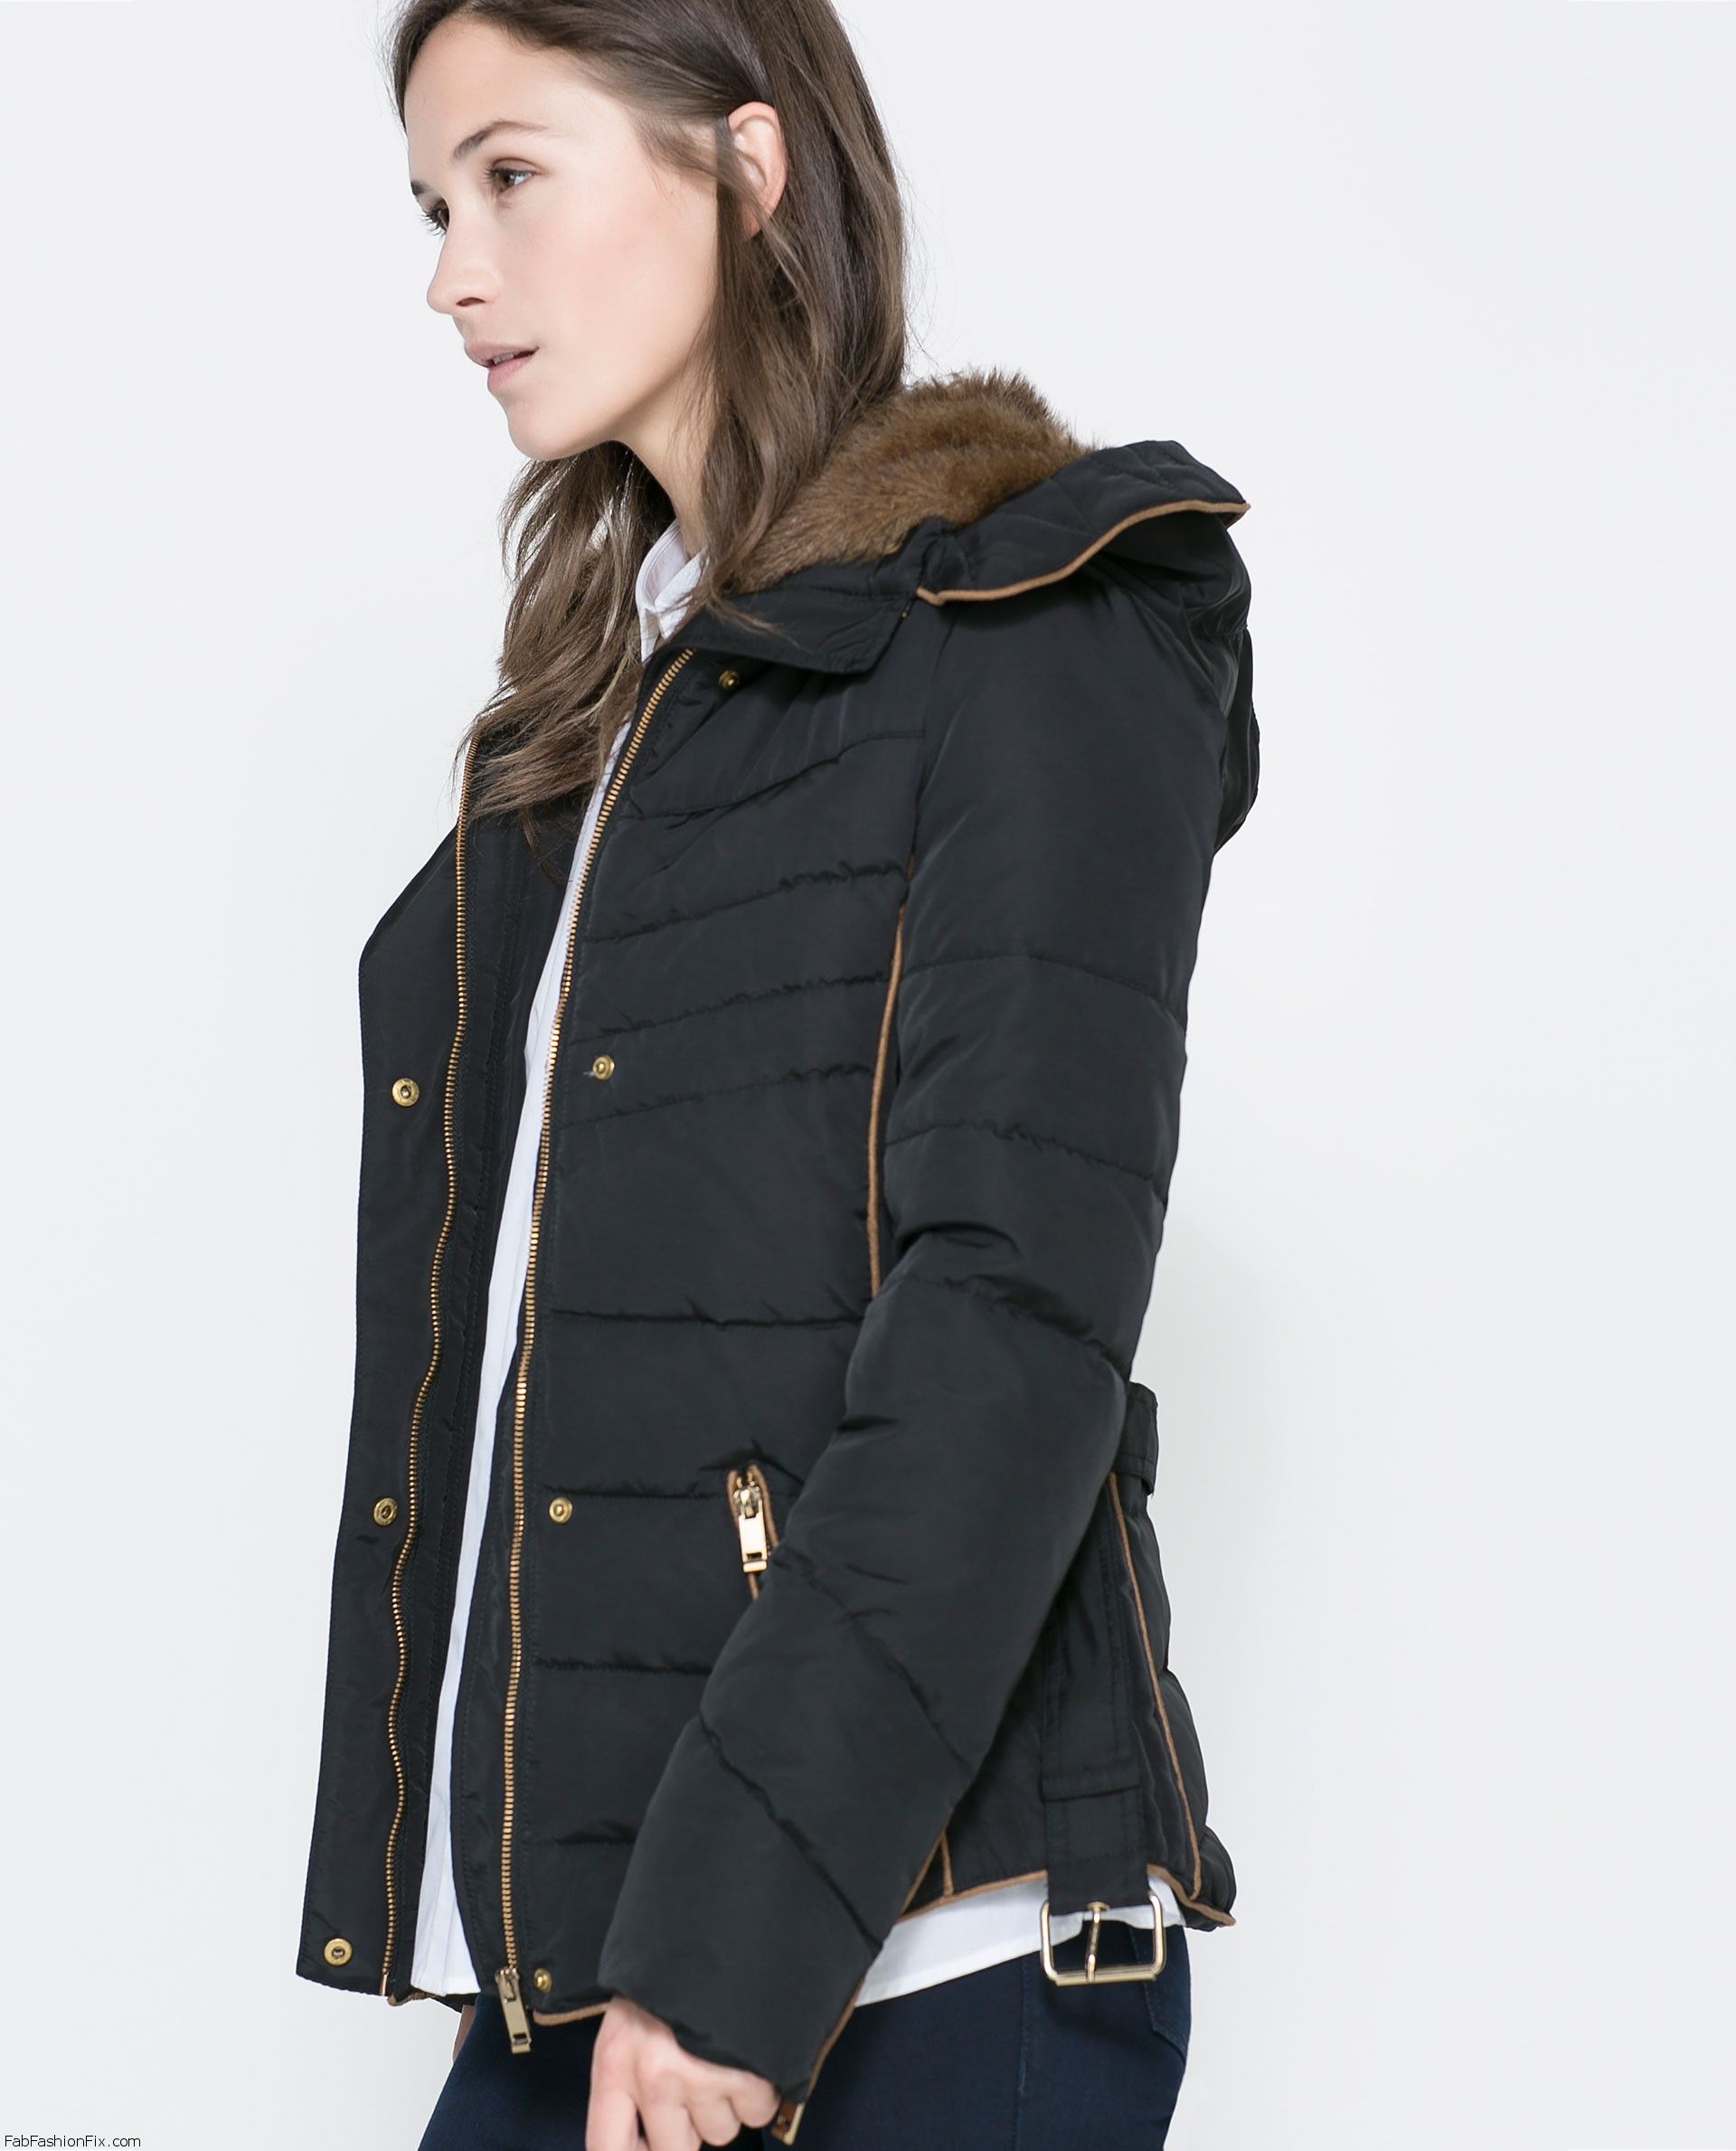 ZARA coats & jackets for fall/winter 2013 | Fab Fashion Fix